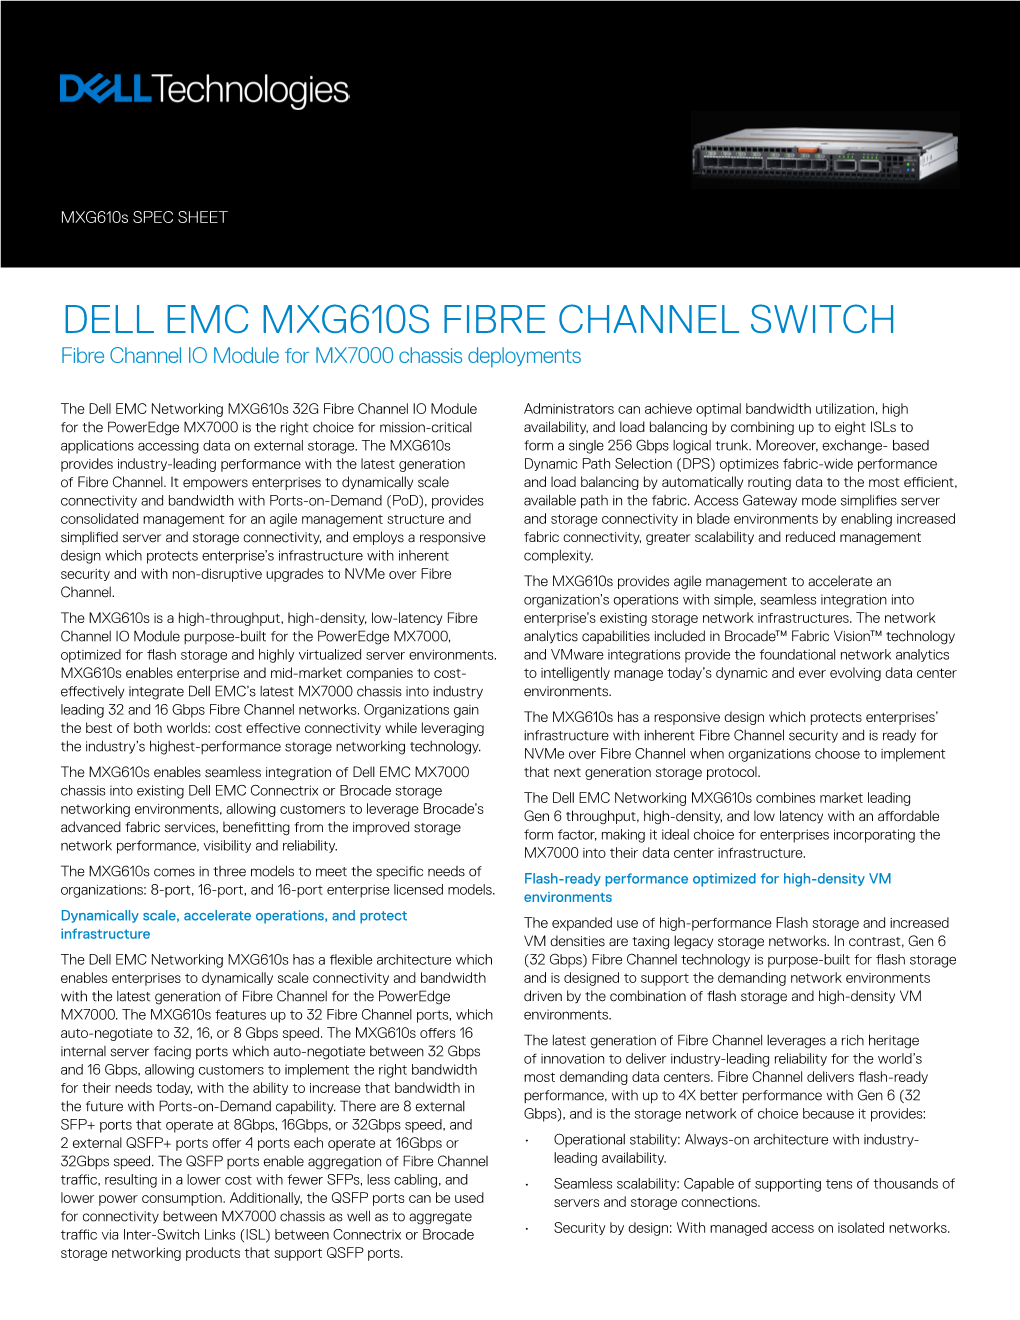 DELL EMC MXG610S FIBRE CHANNEL SWITCH Fibre Channel IO Module for MX7000 Chassis Deployments